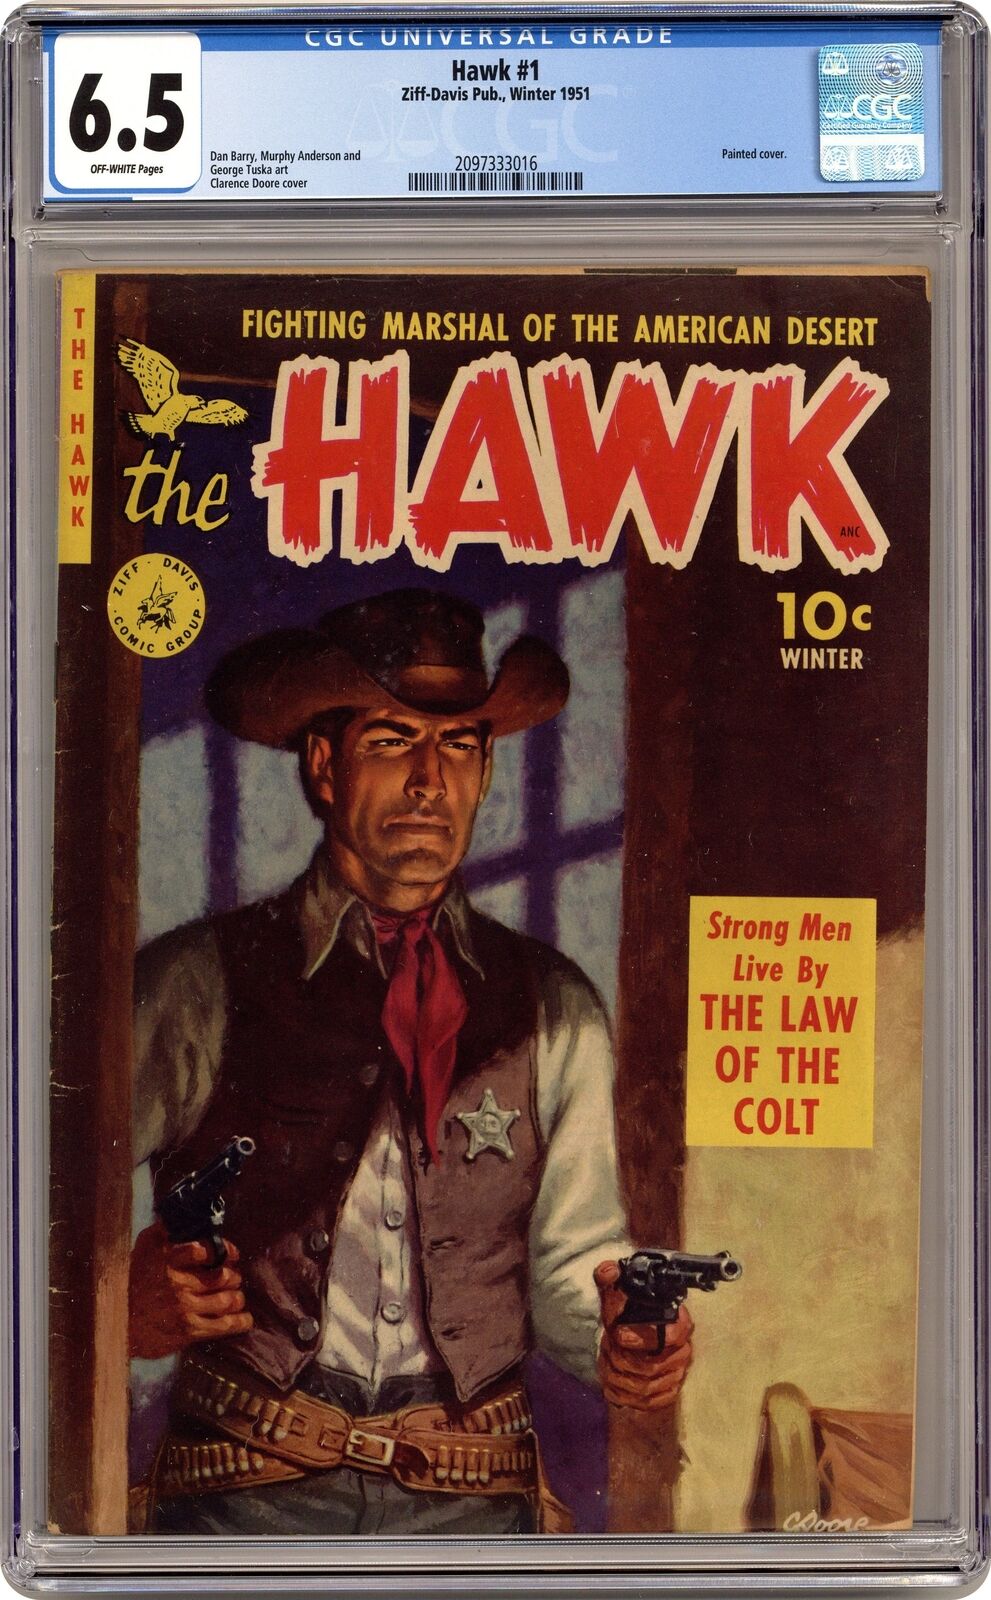 Hawk, The #1 CGC 6.5 1951 2097333016